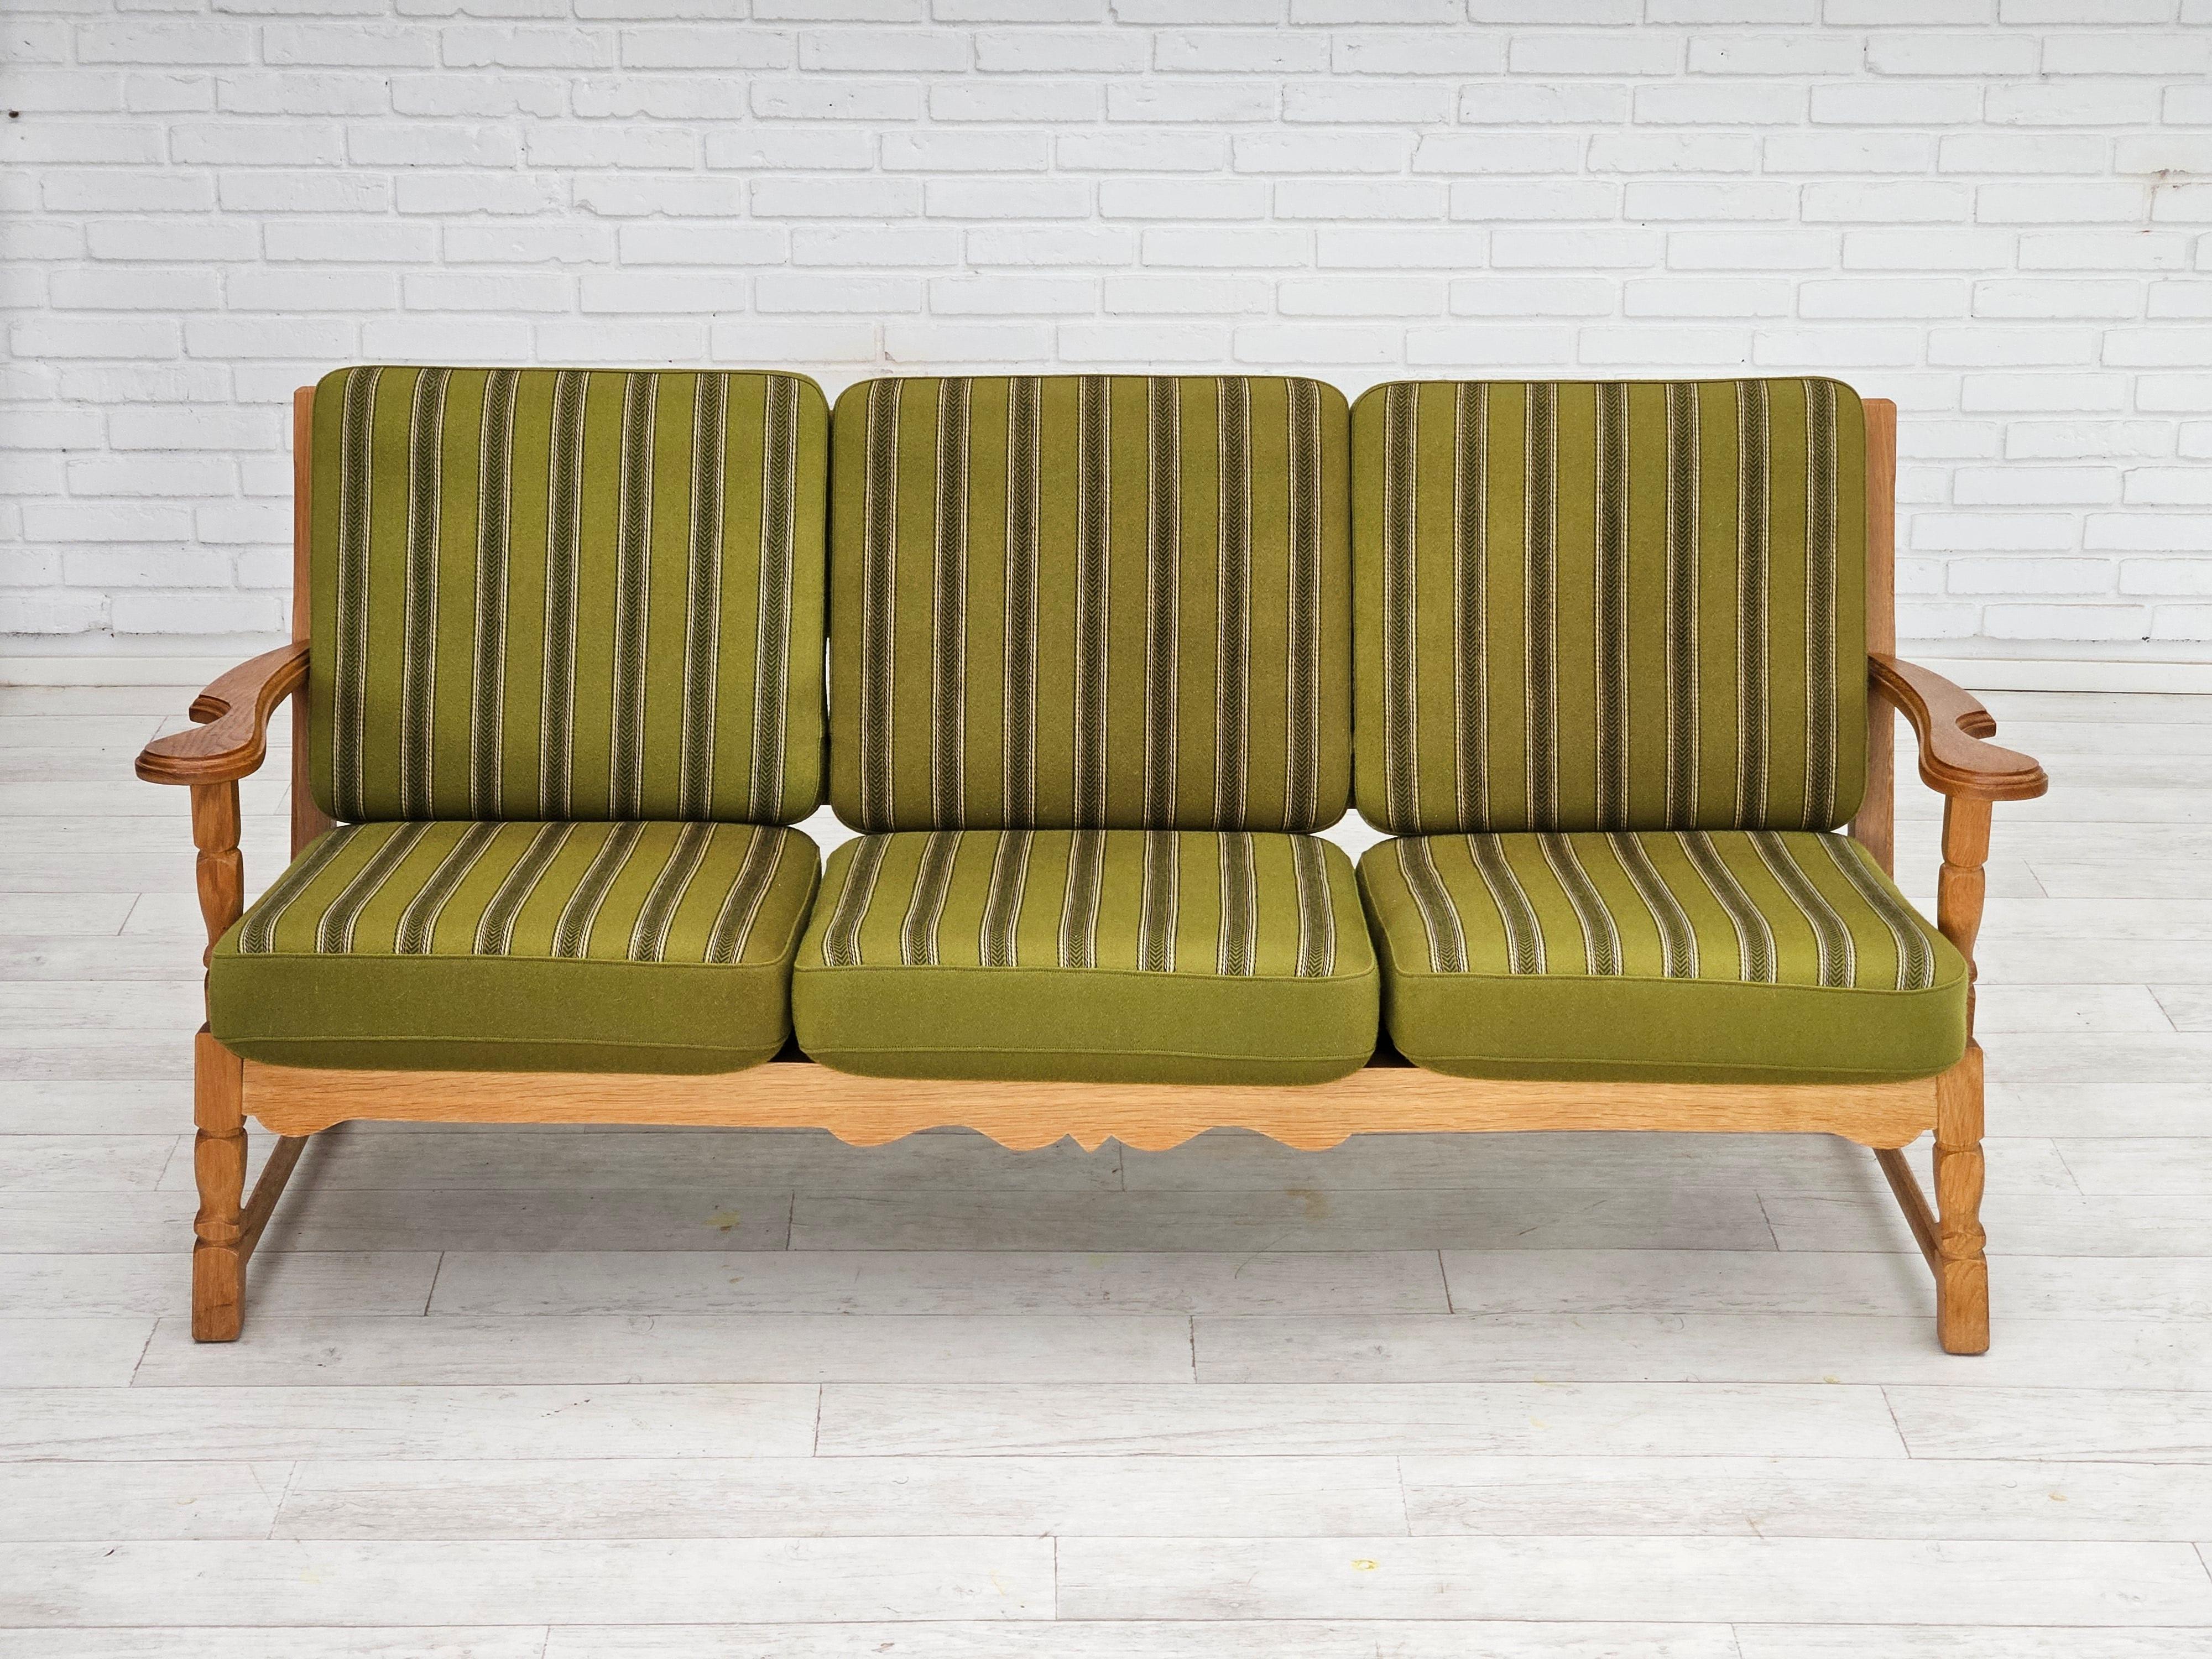 Scandinavian Modern 1970s, Danish design, 3 seater sofa, original condition, solid oak wood, furni For Sale